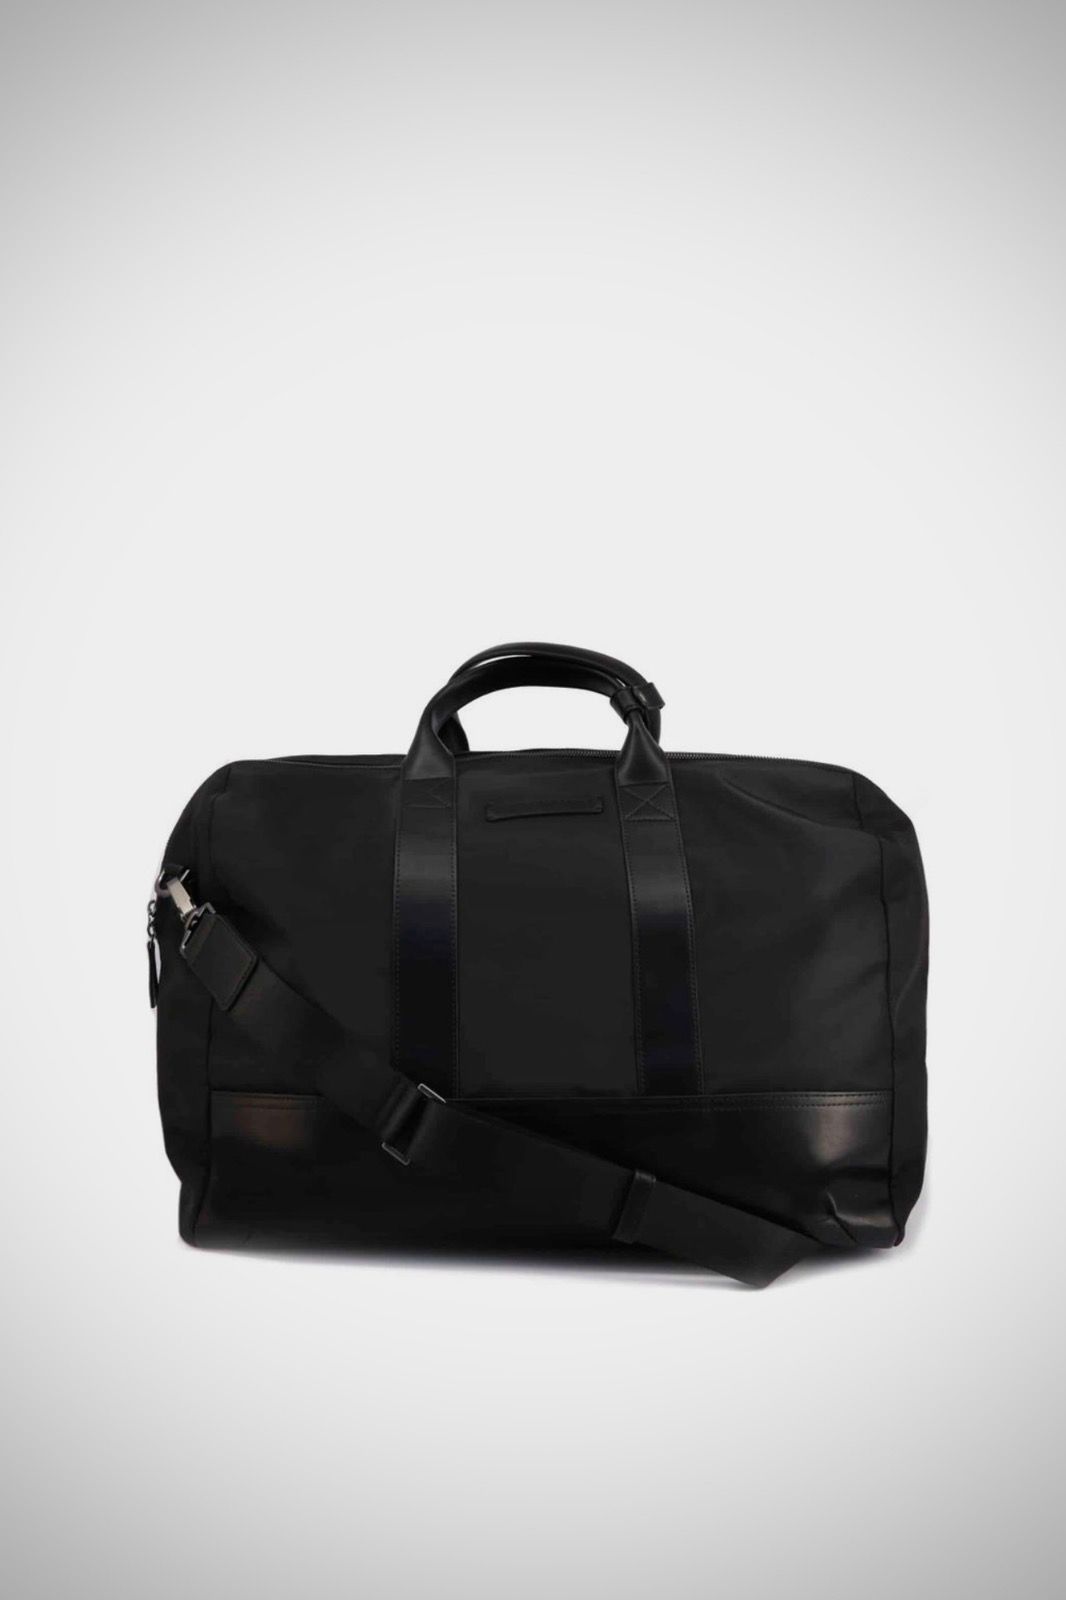 Emporio Armani Duffle bag, 50% off retail | Grailed